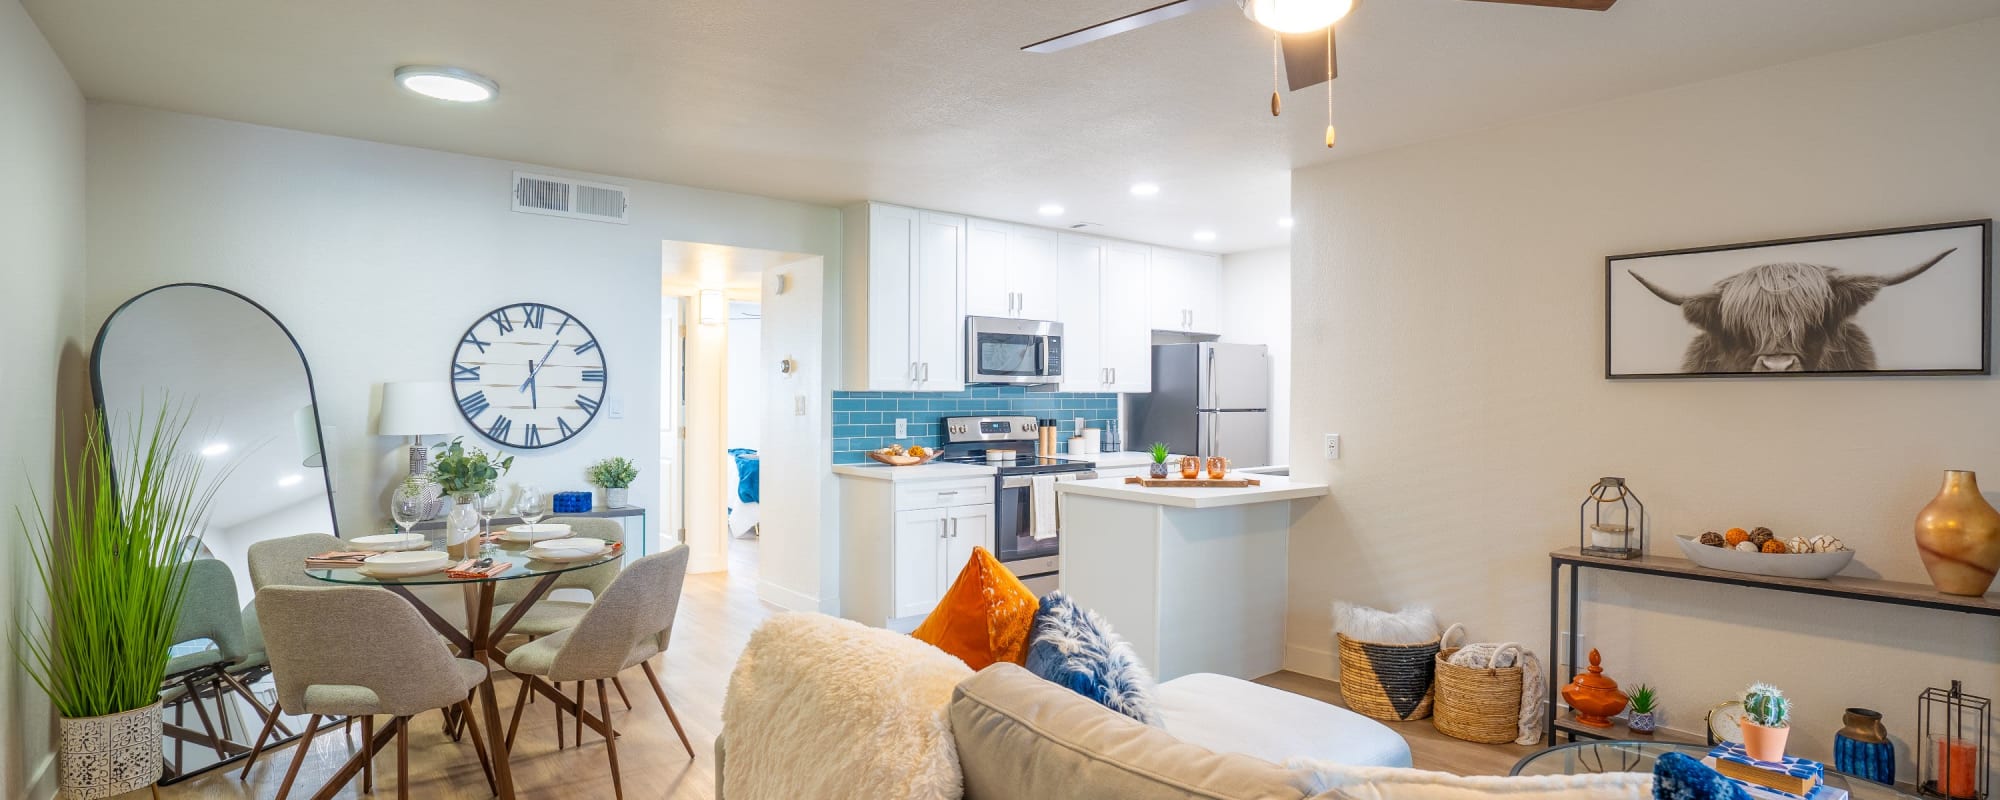 Spacious apartment at Riverside Apartments in Tempe, Arizona